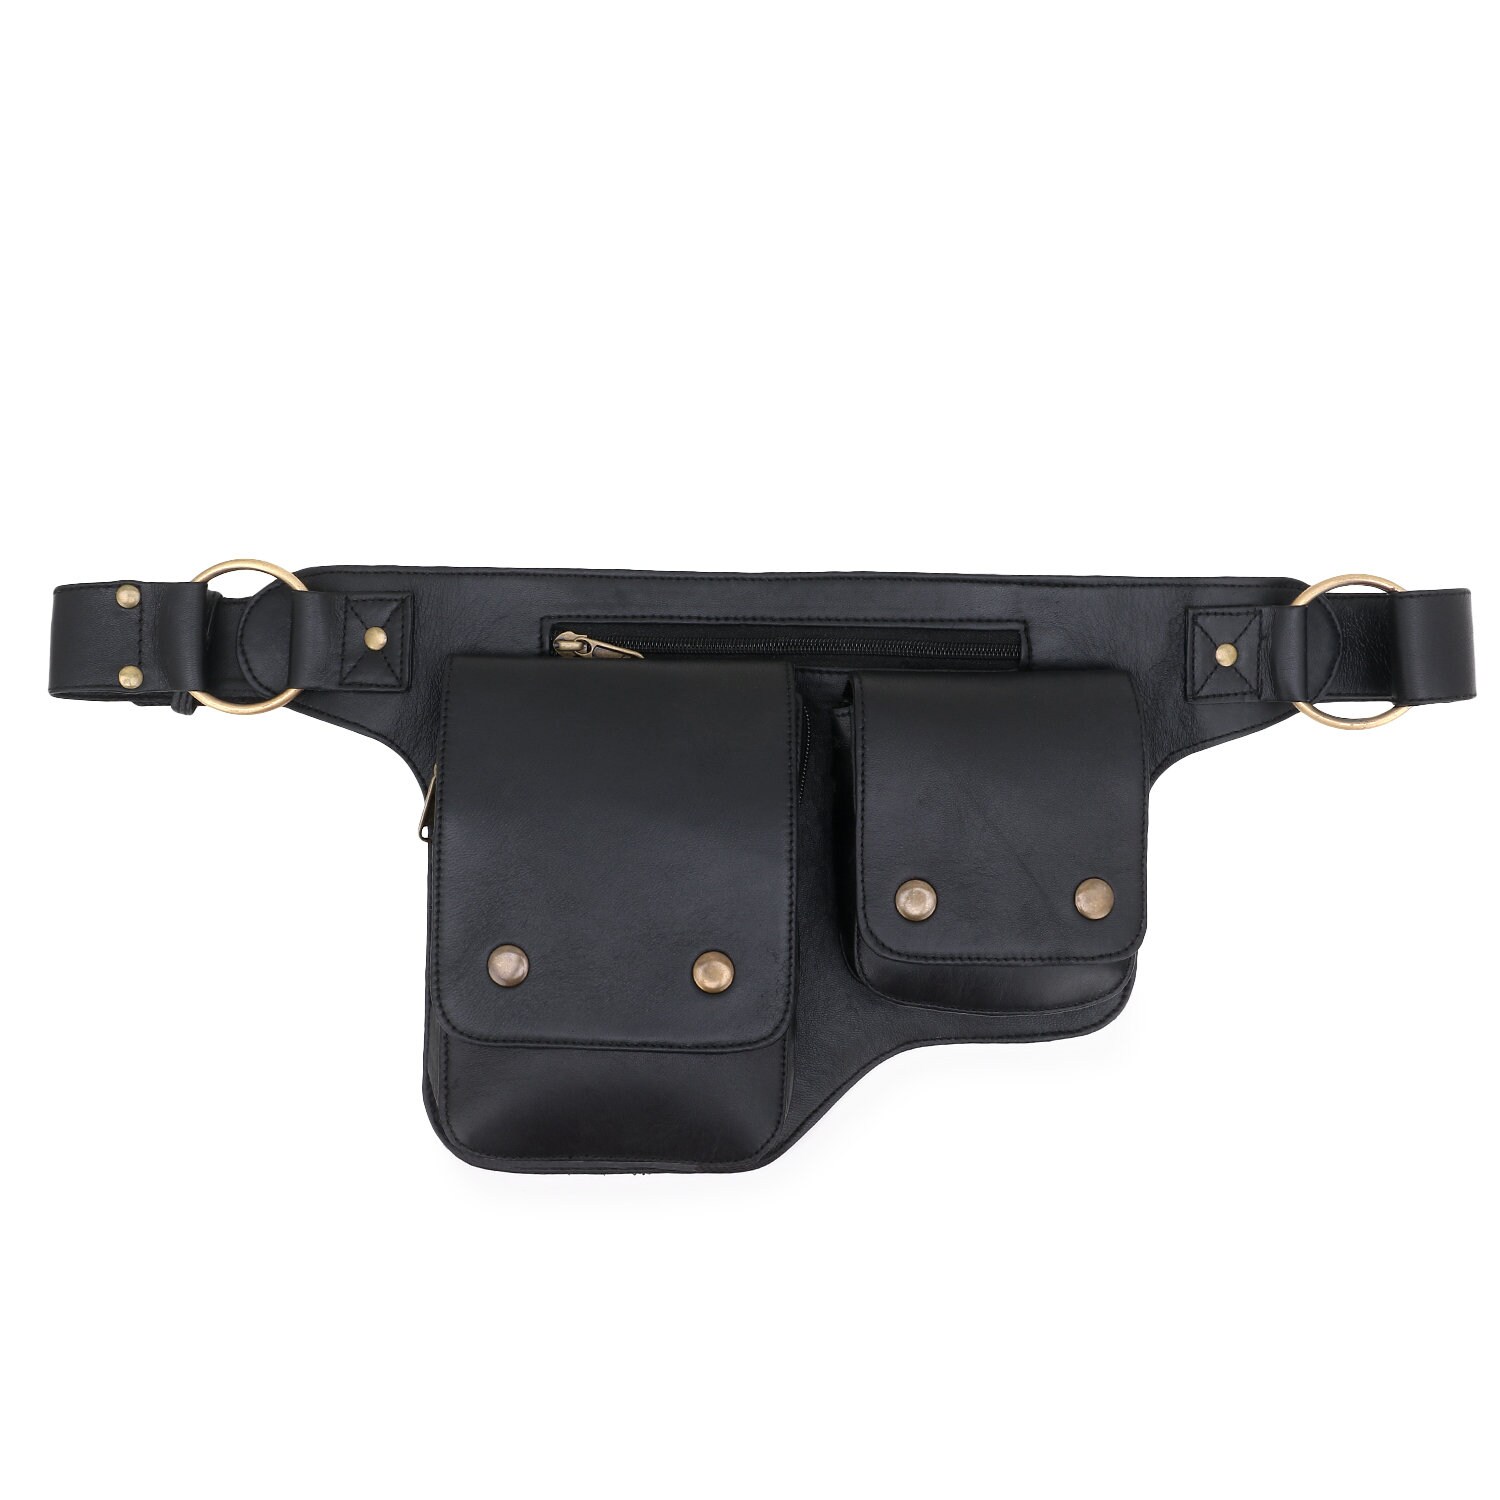 Panashe Black Leather Utility Belt Bag - Free Size Waist Pack with Multiple  Pockets